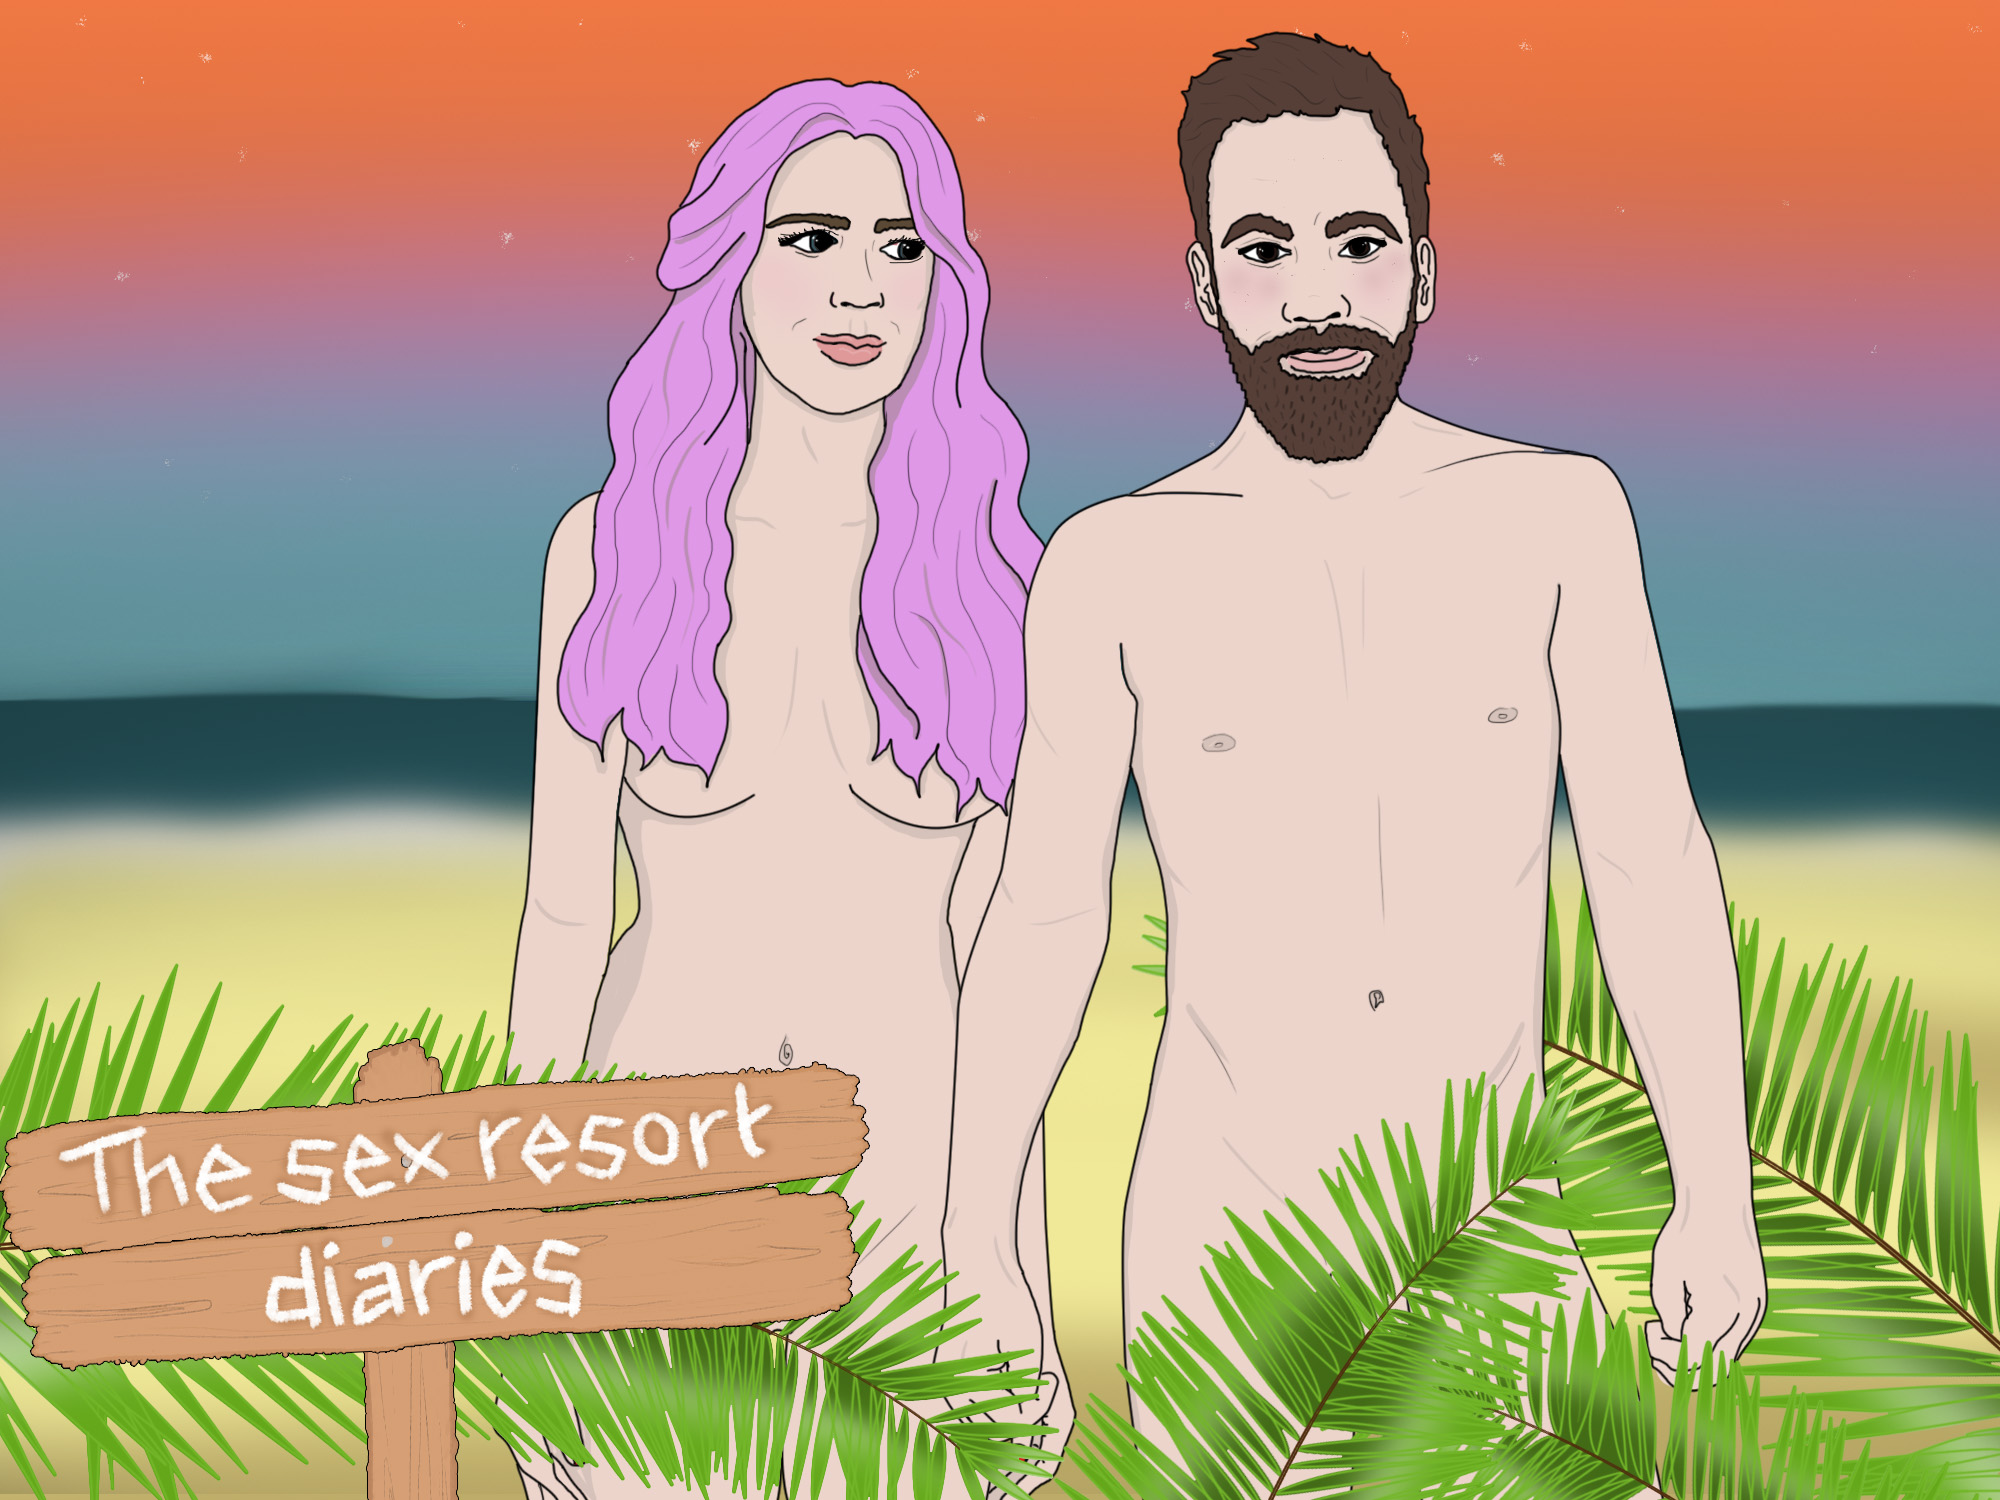 Bail reccomend mature couples fuck nude beach